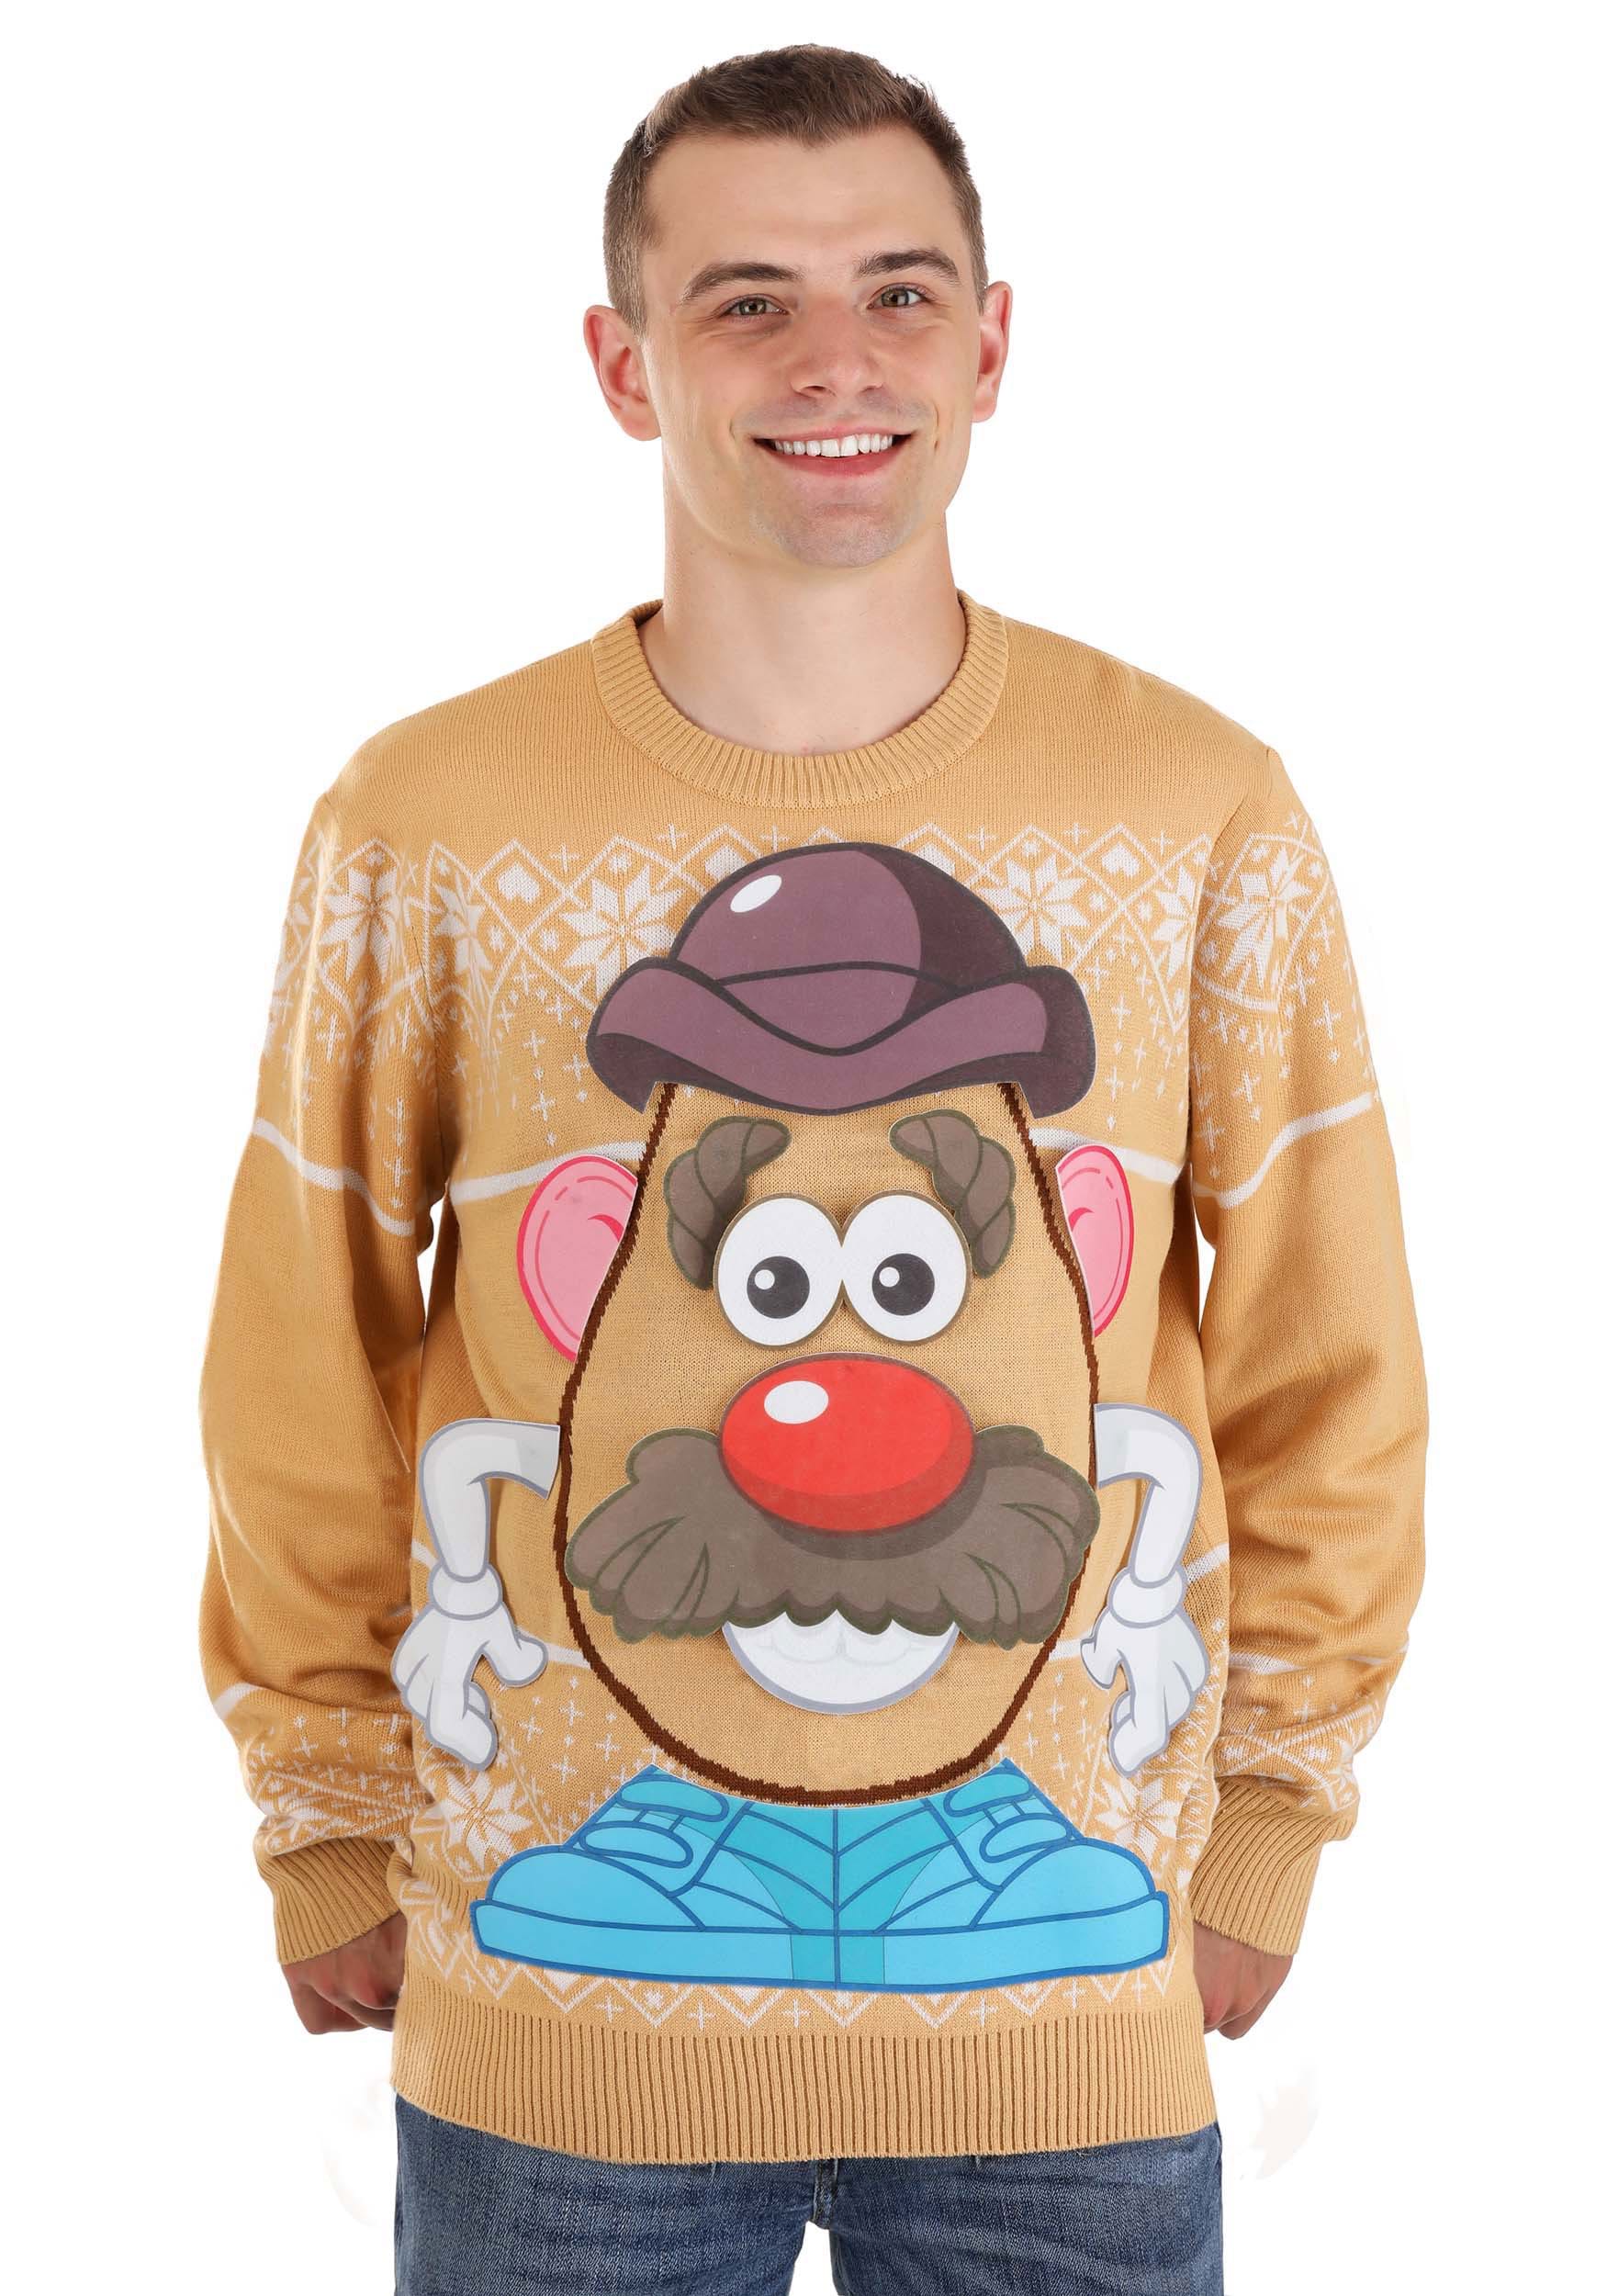 Image of Mr Potato Head Adult Sweater ID FUN3968AD-S